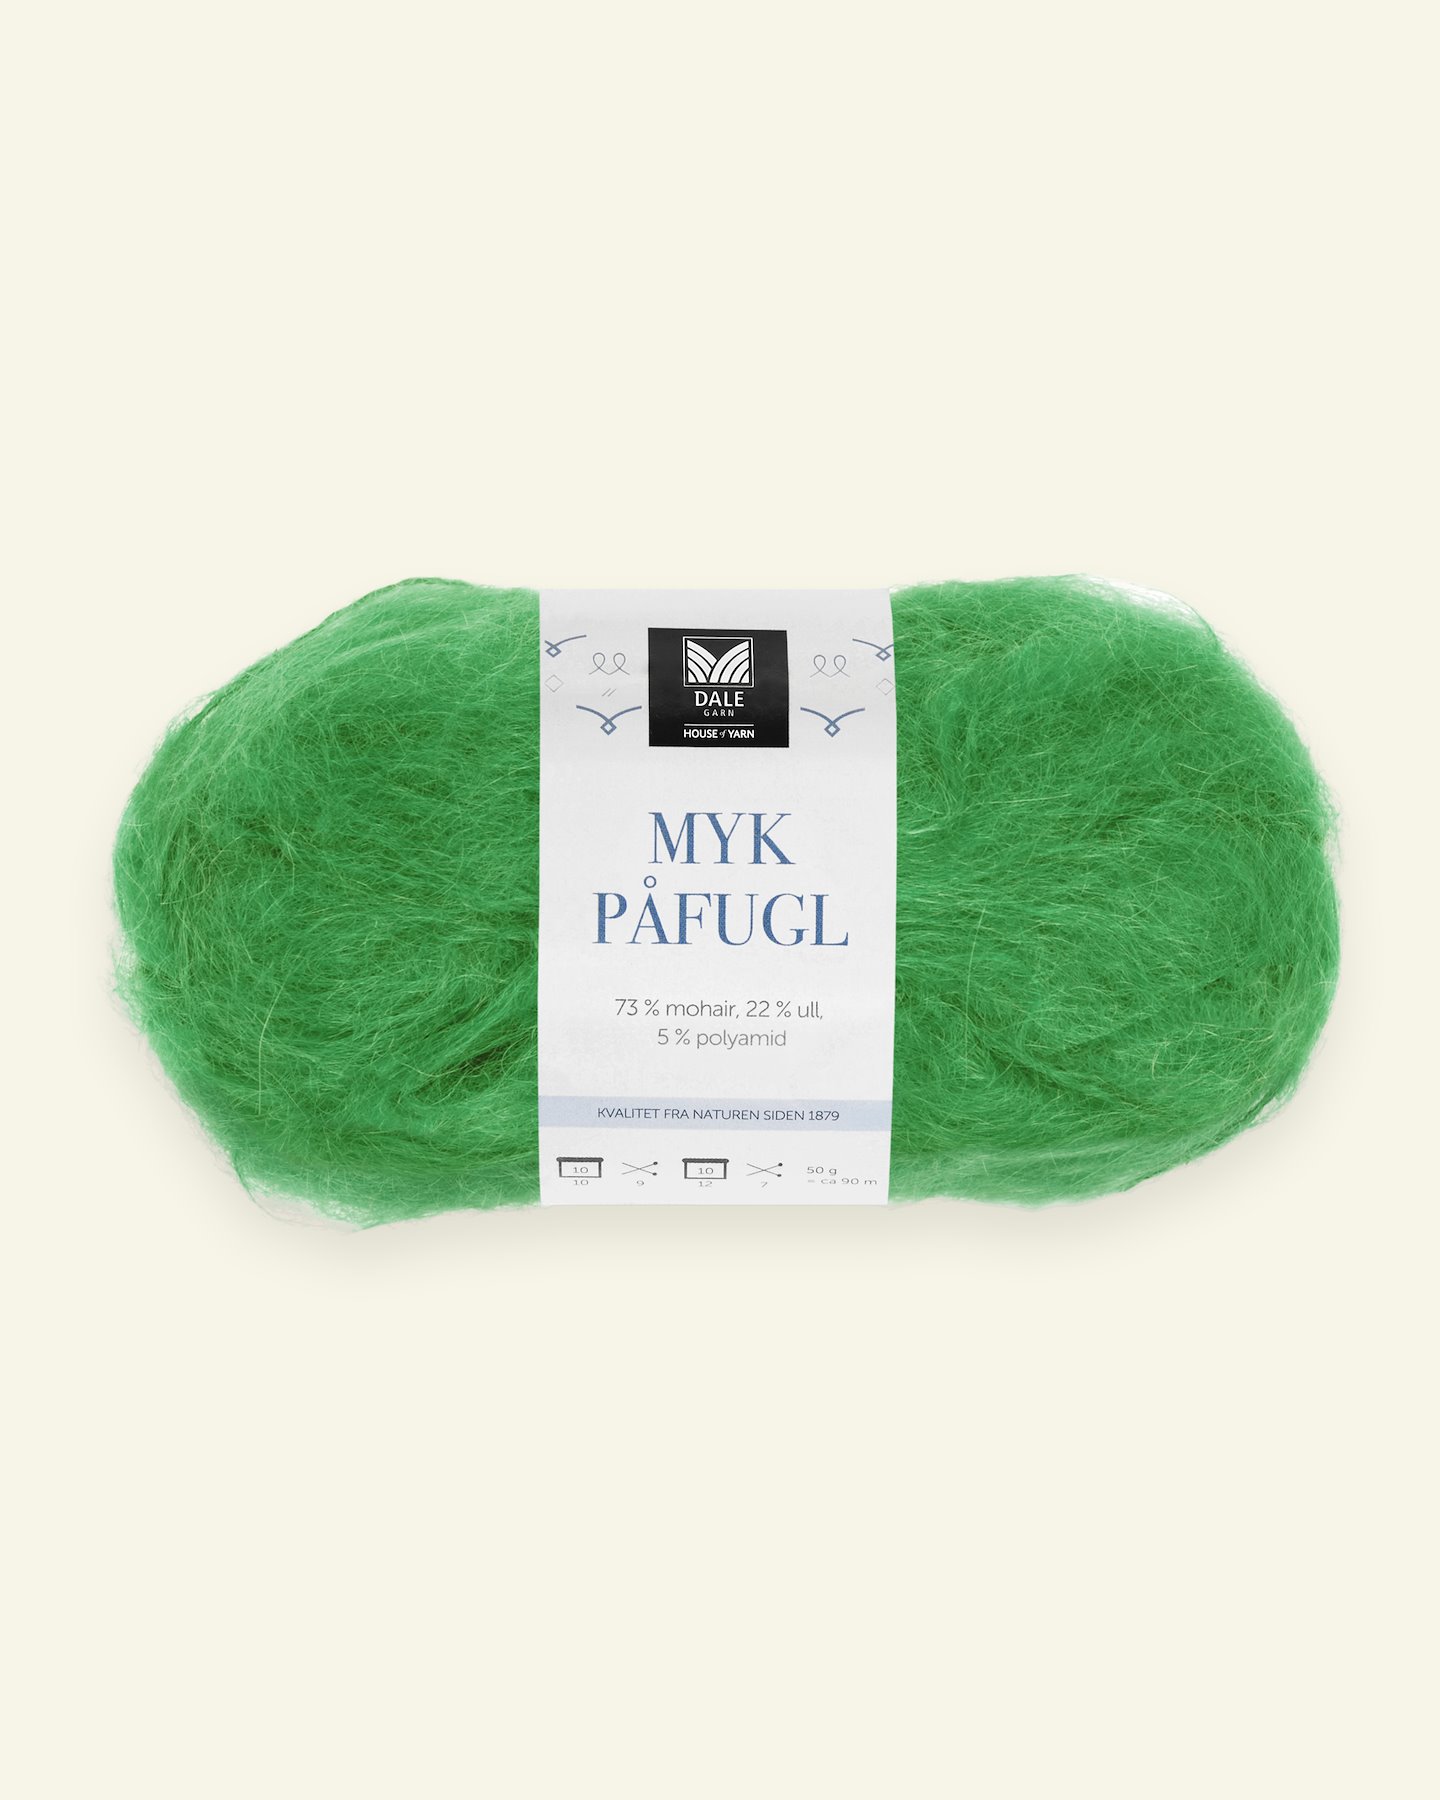 Dale Garn, mohair/wool yarn "Myk Påfugl", green 90000263_pack